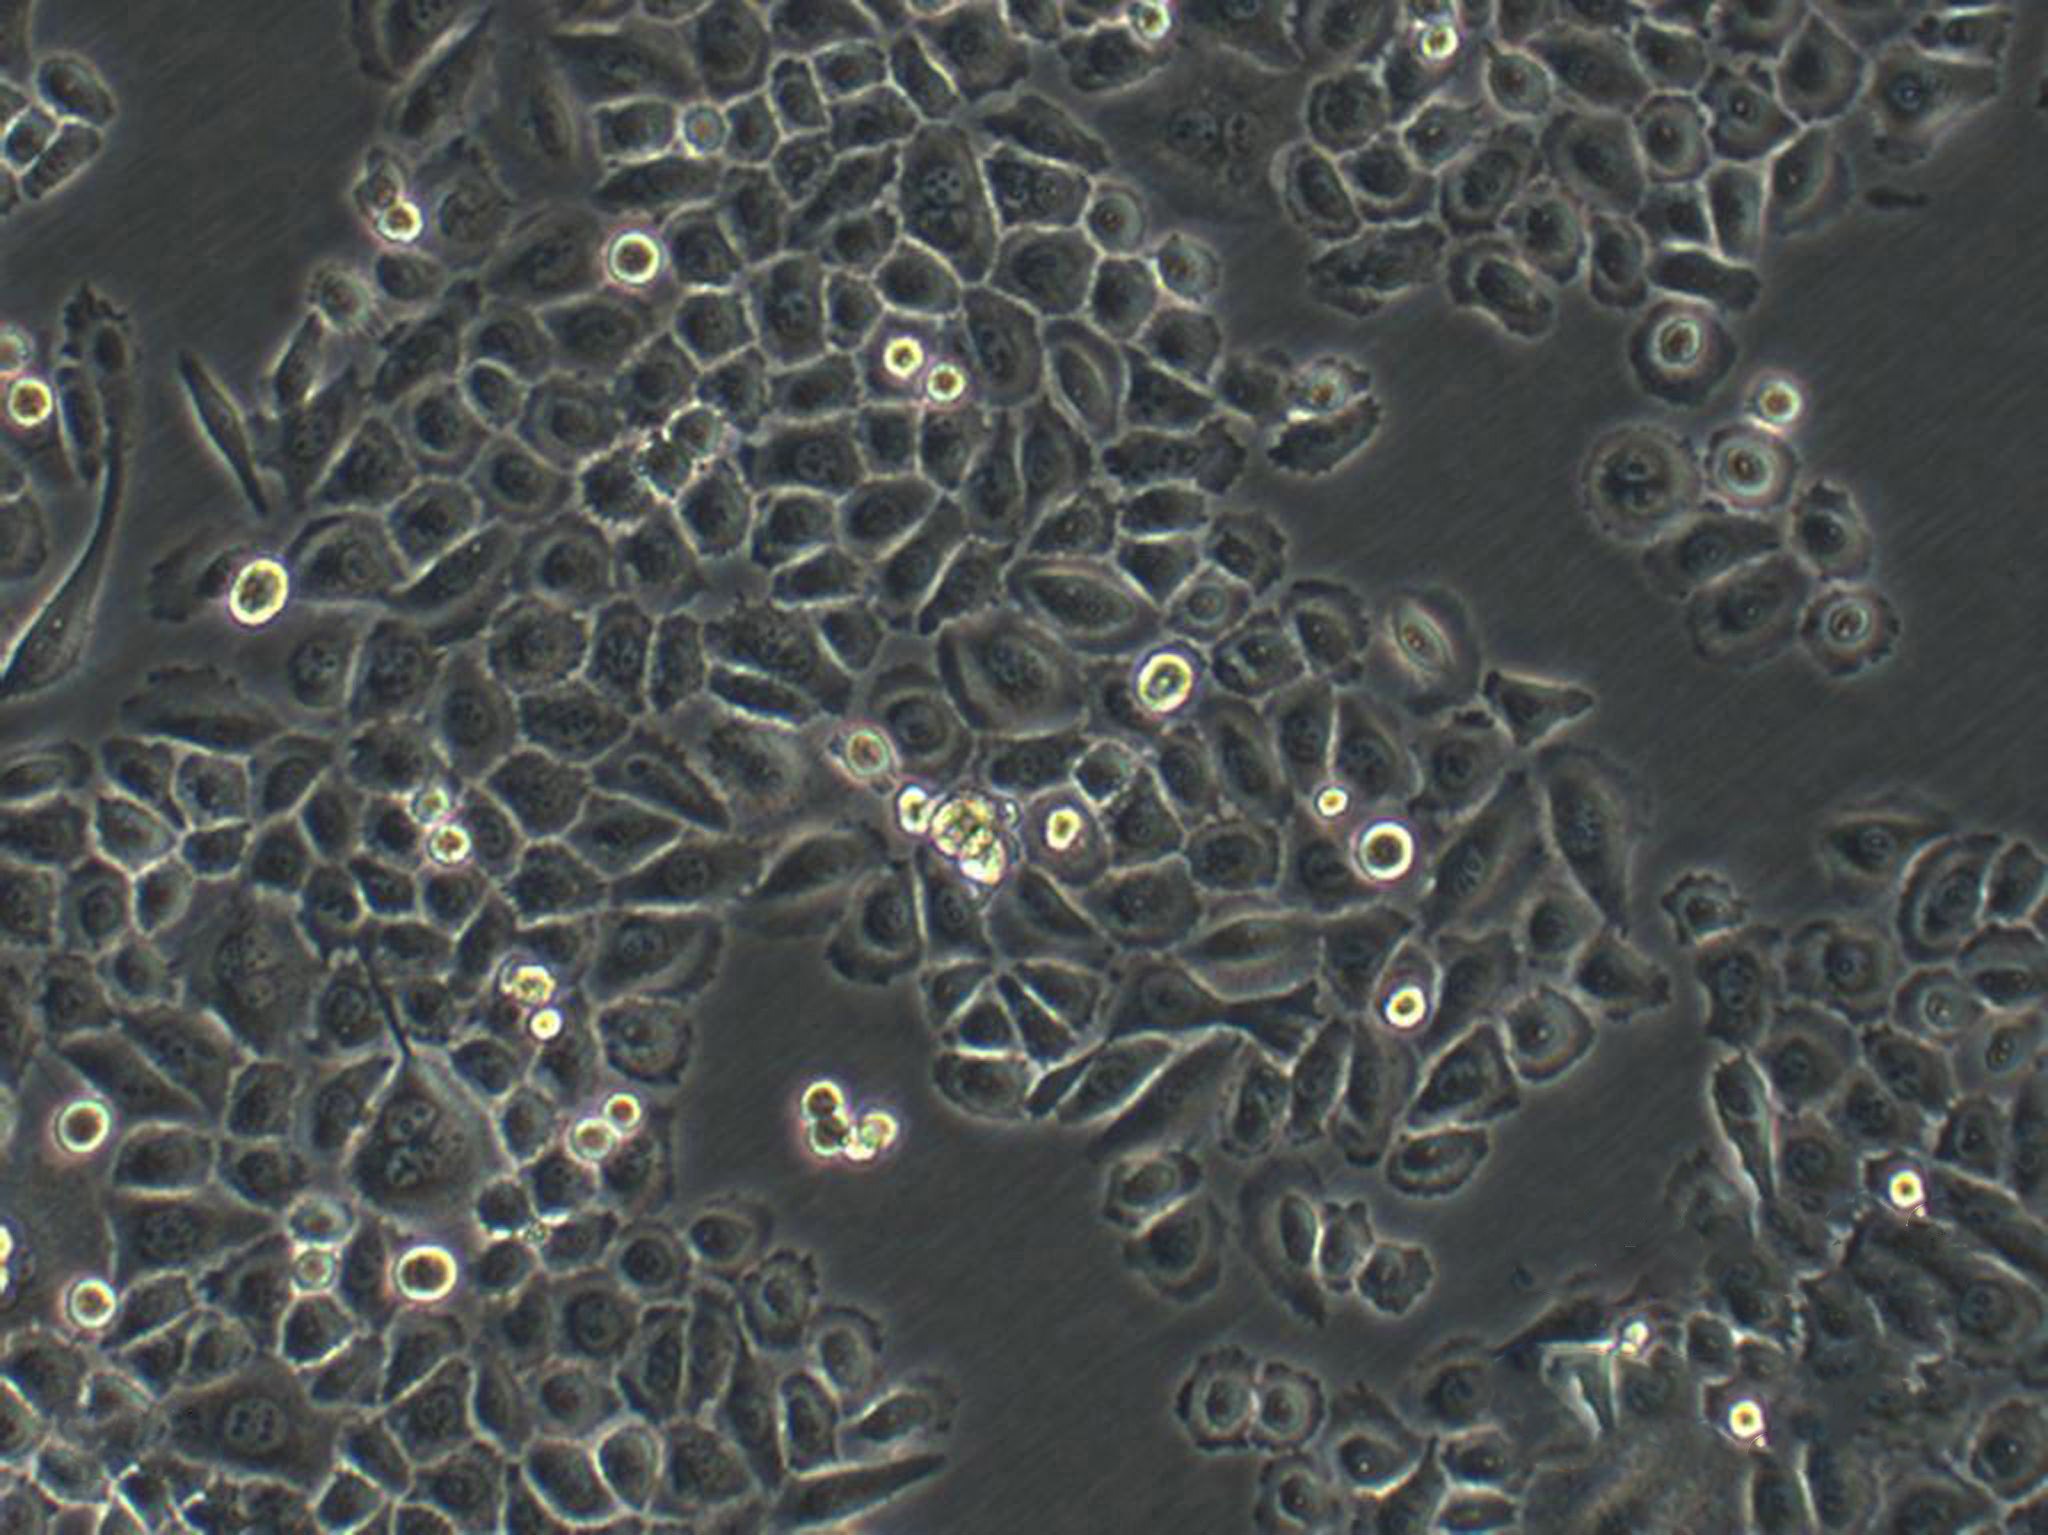 HSC-6 Cell:人口腔鳞癌细胞系